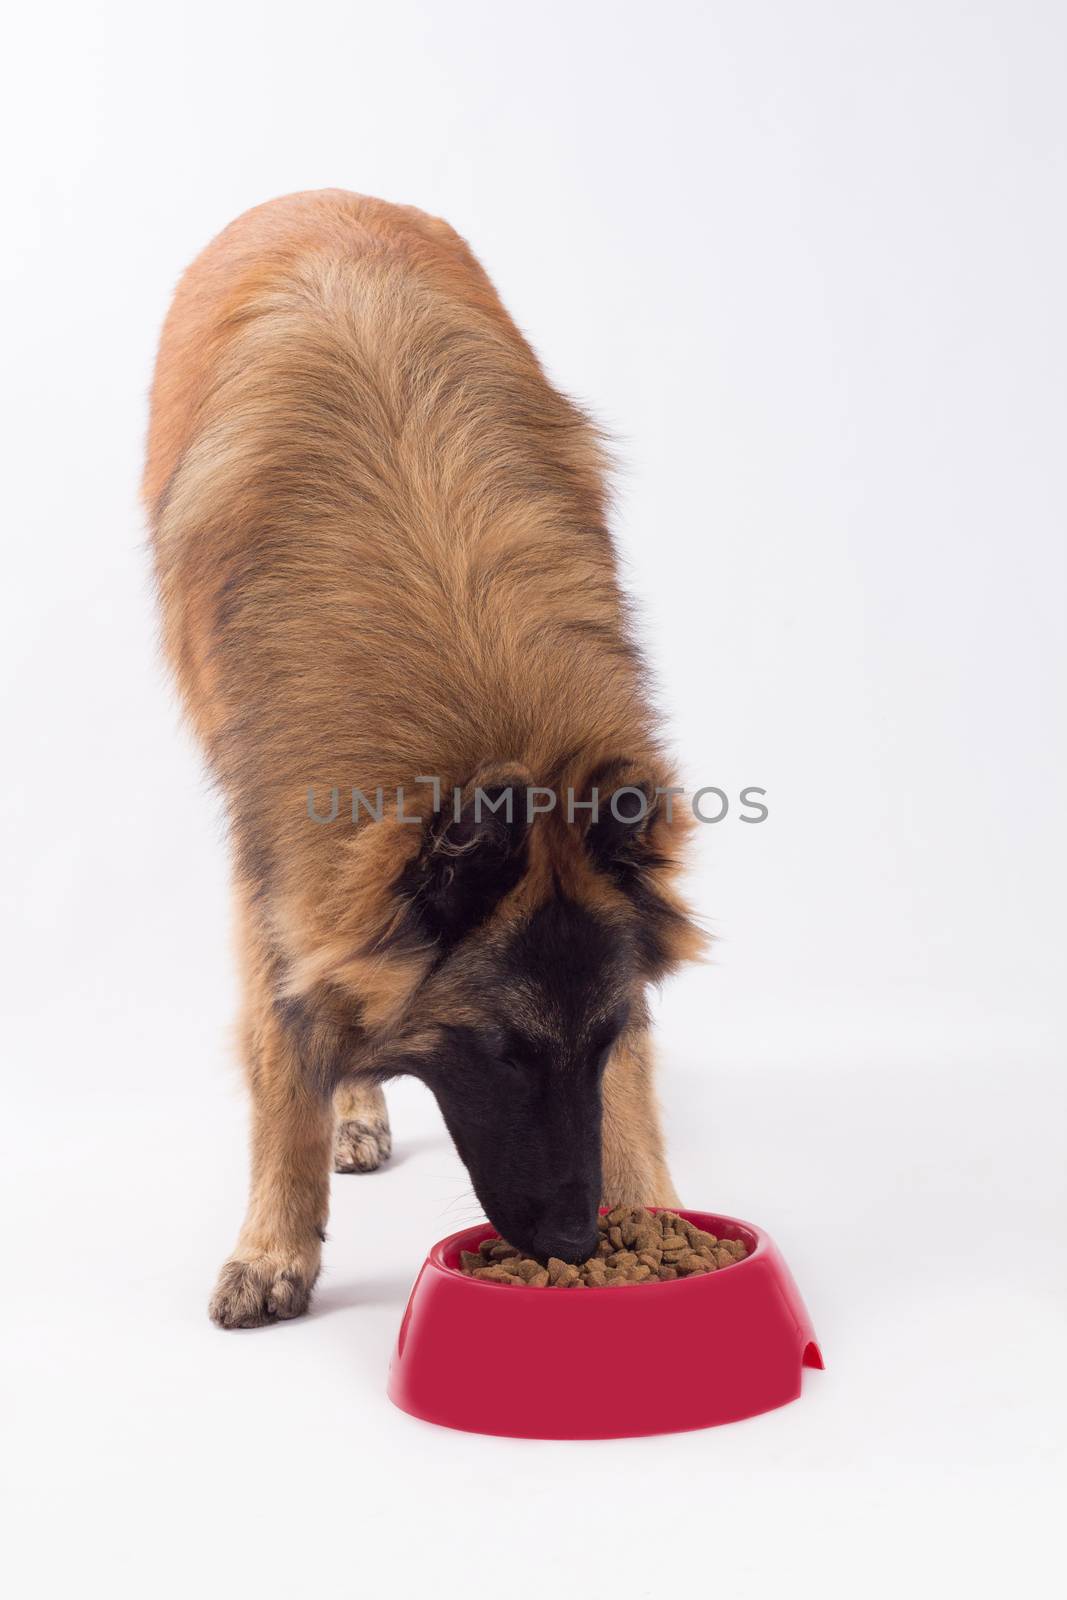 Belgian shepherd, Tervuren dog, eating from red bowl by avanheertum